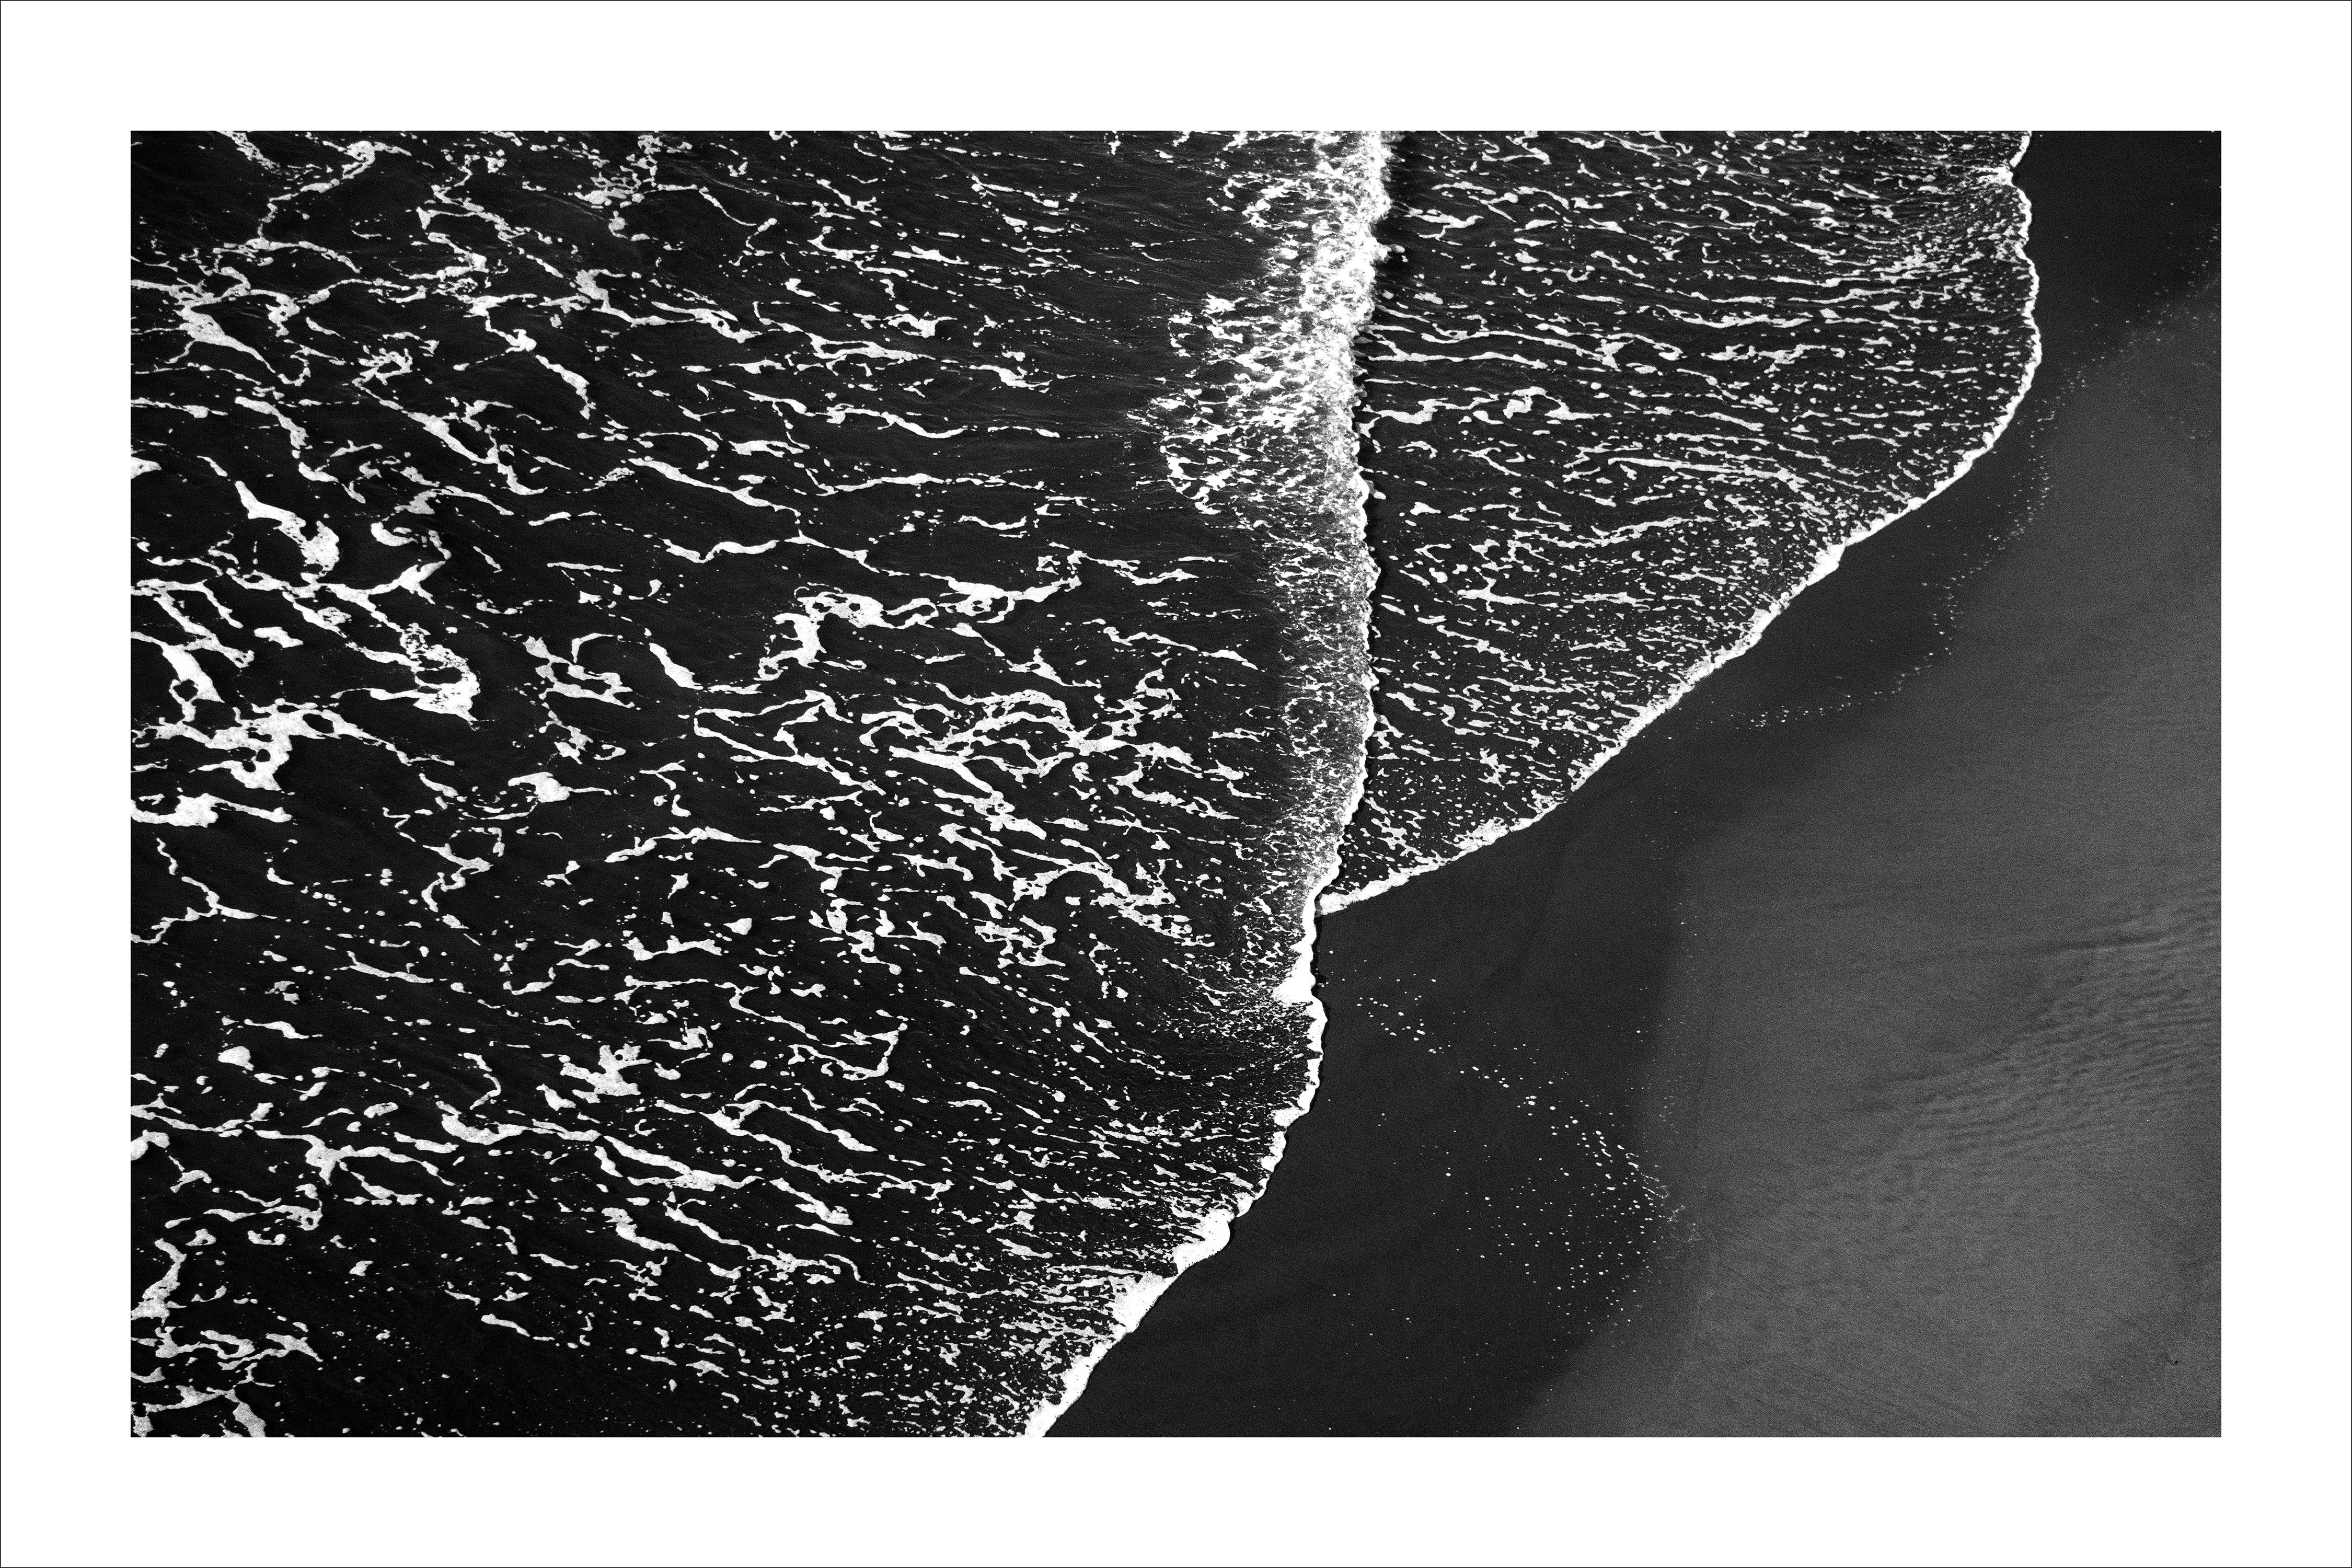 Kind of Cyan Landscape Photograph - Pacific Foamy Shoreline, Black and White Seascape, Minimal Style Giclée, Classy